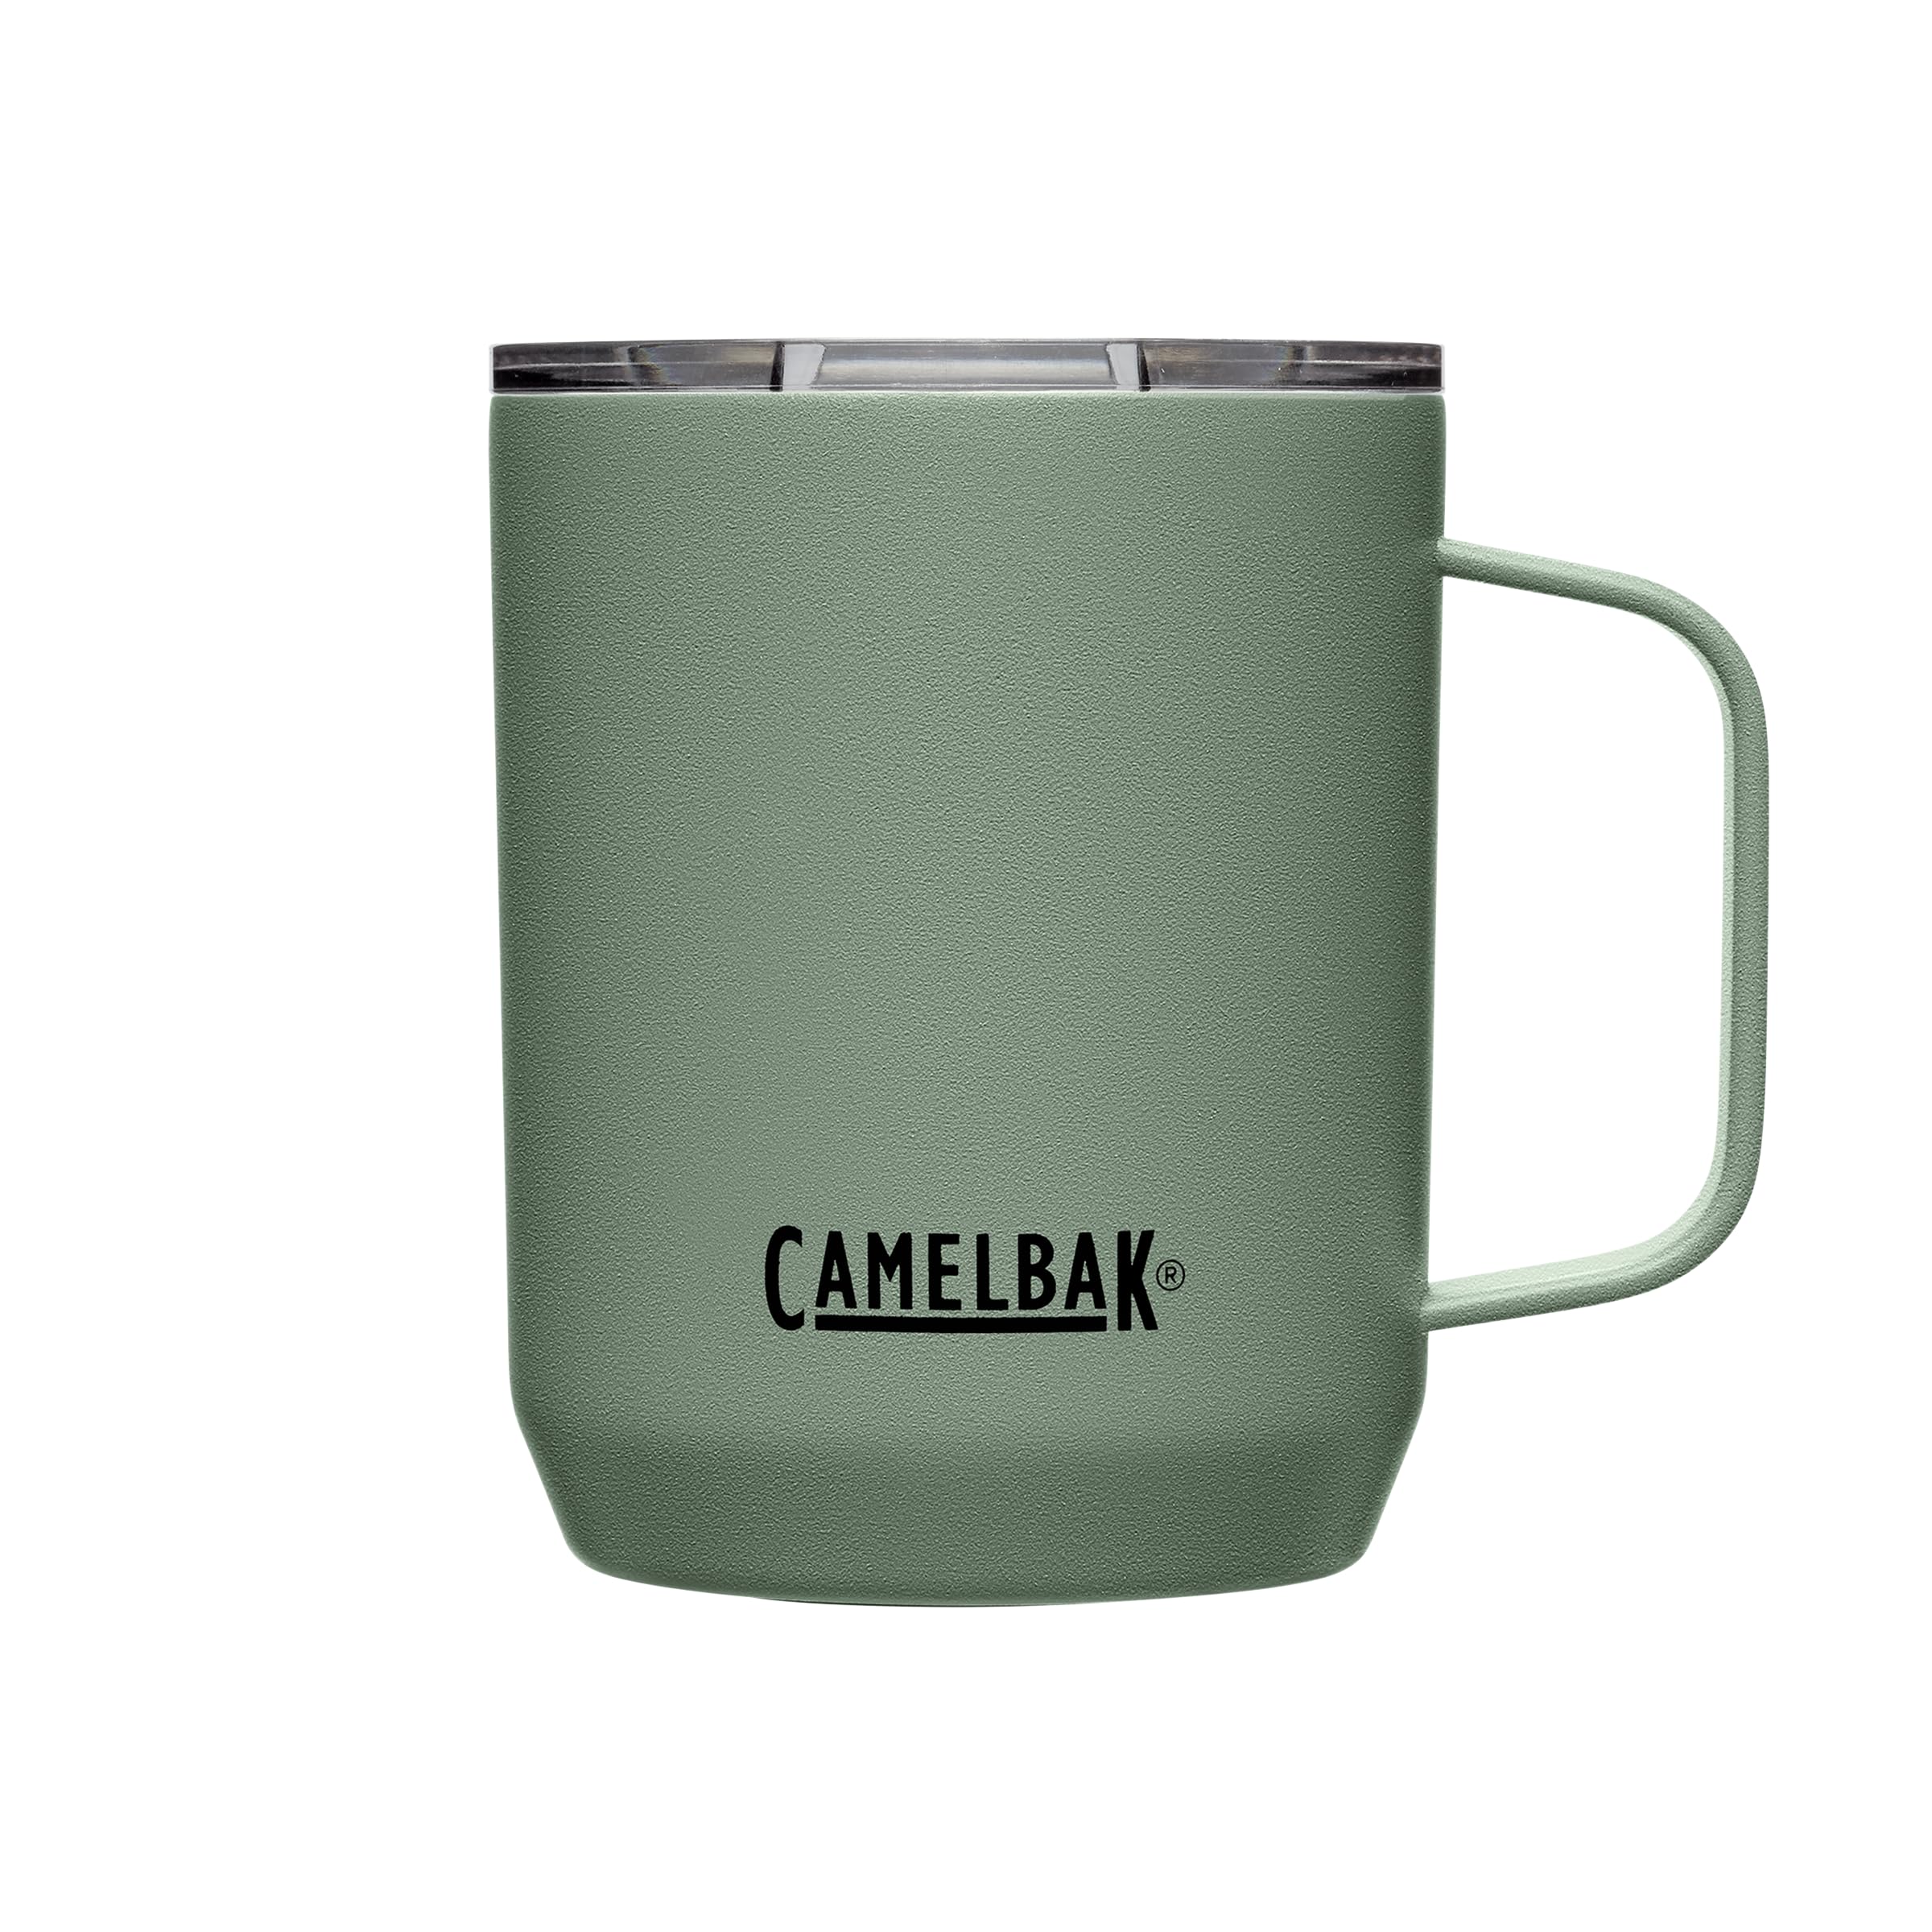 Camelbak Horizon vakuumisolierter Campingbecher aus Edelstahl, 350 ml Moos, 1 Stück (1er Pack)